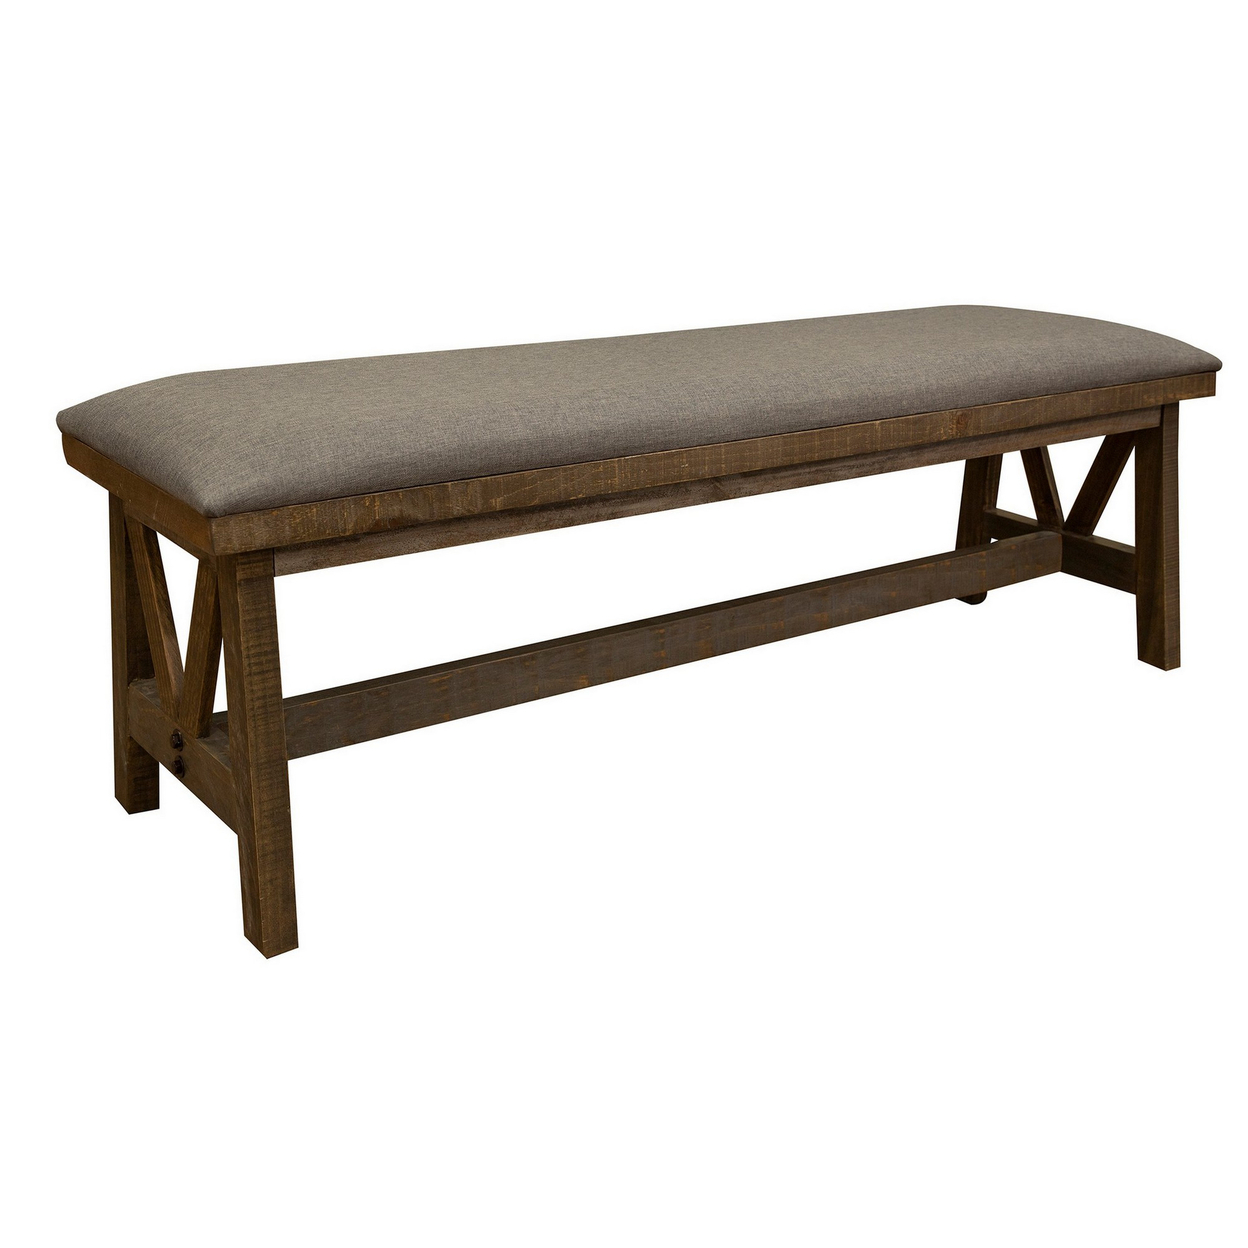 Peya 54 Inch Bench, Solid Pine Wood, Gray Polyester Padded Seat, Brown Legs- Saltoro Sherpi